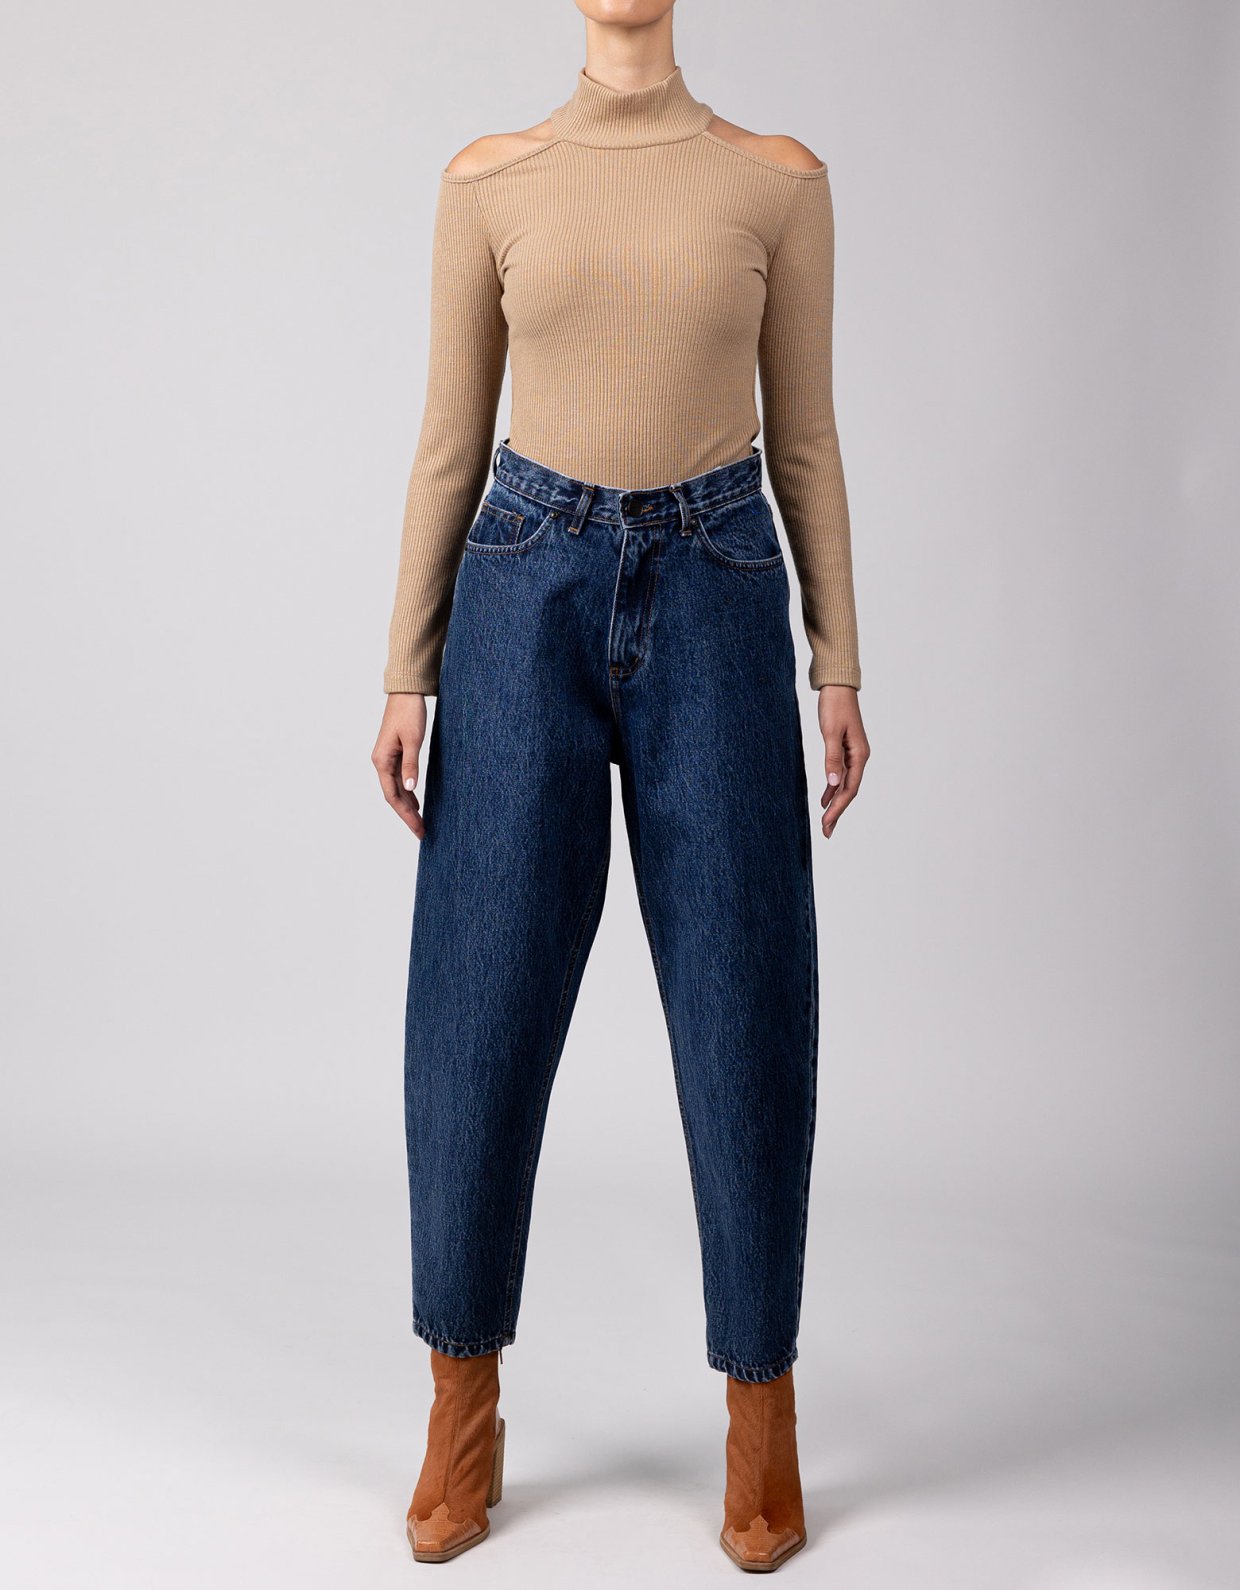 Sac & CO Jeans Lima  slouchy denim pants dark blue